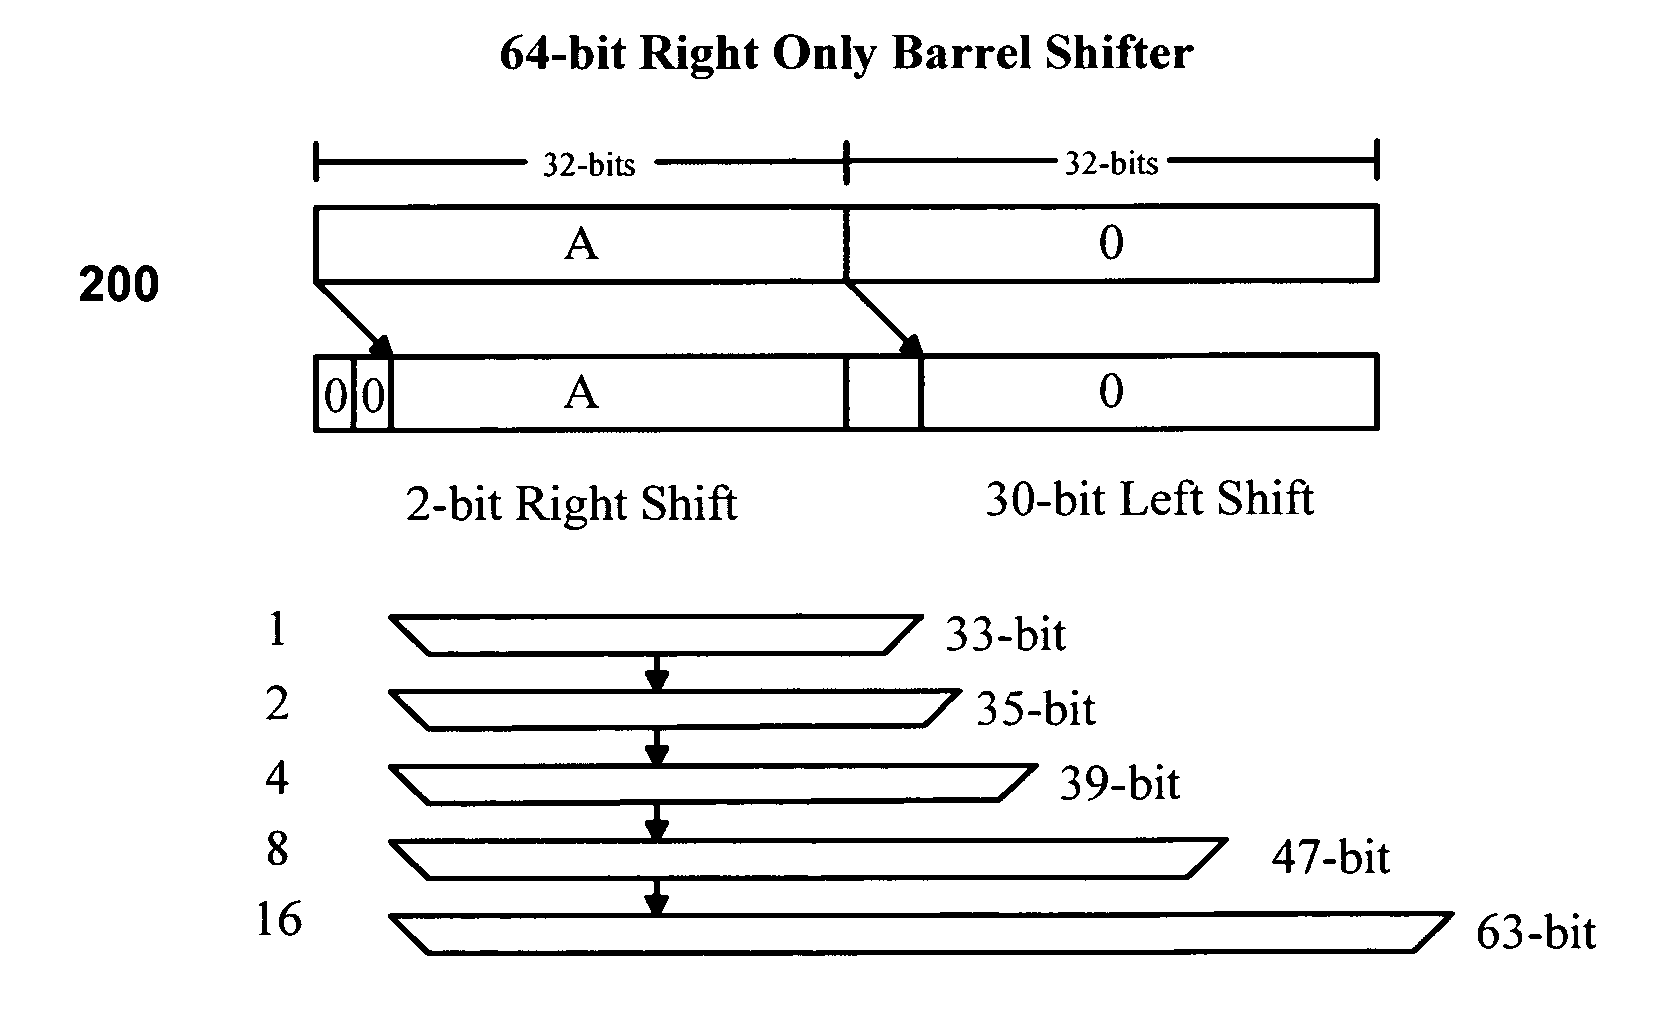 Barrel shifter for a microprocessor